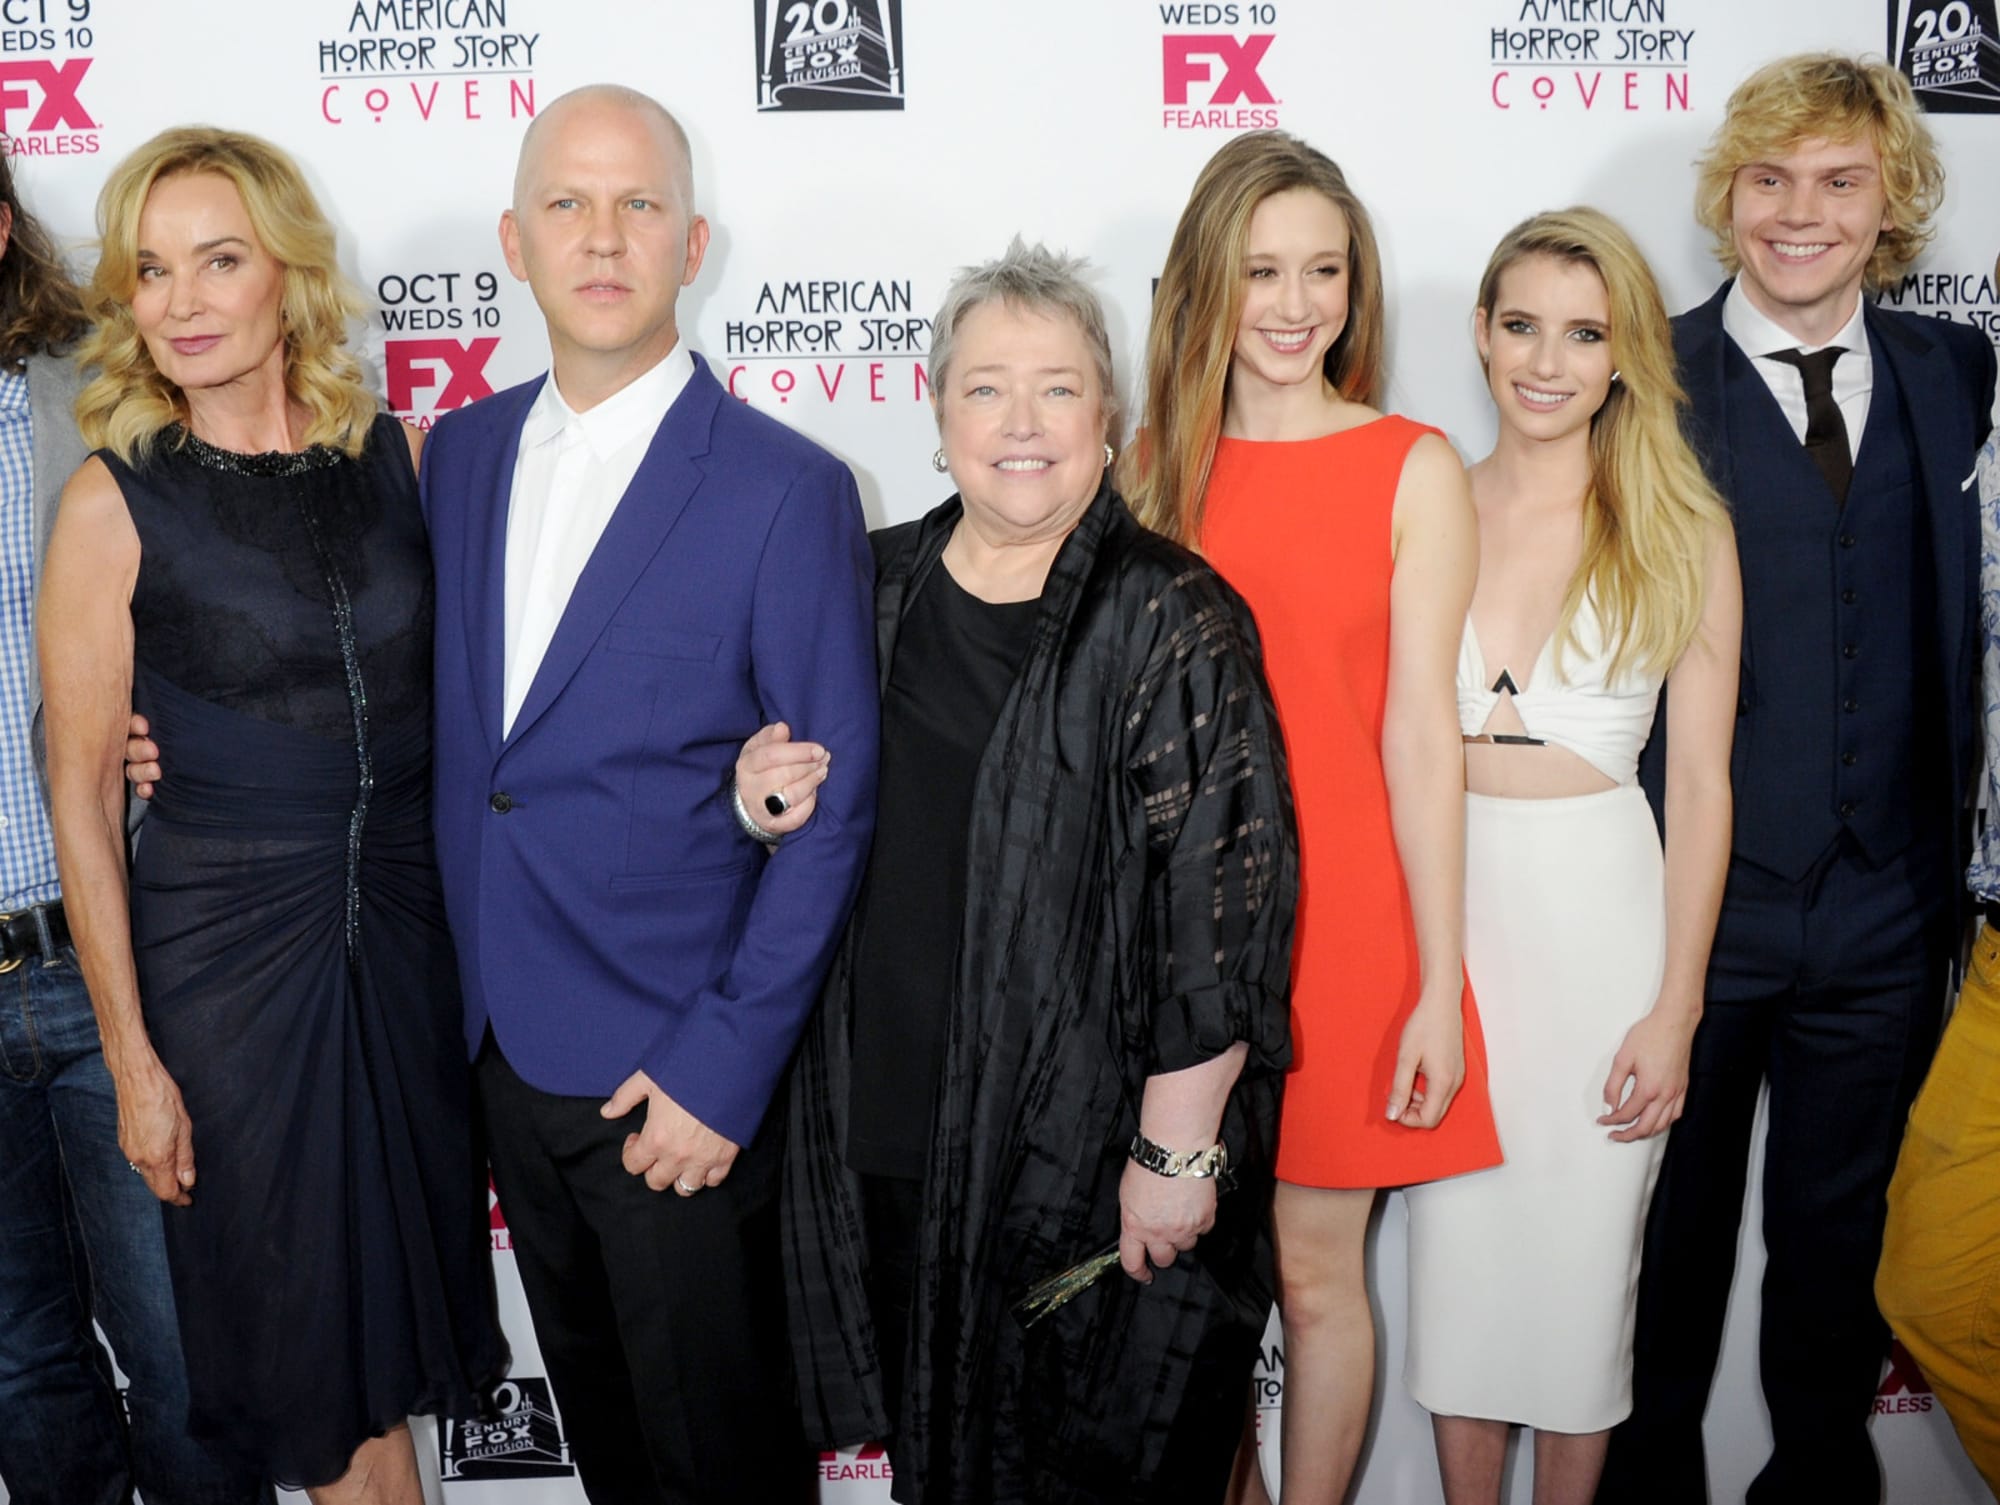 American Horror Story season 1 cast: Who is the original AHS cast?